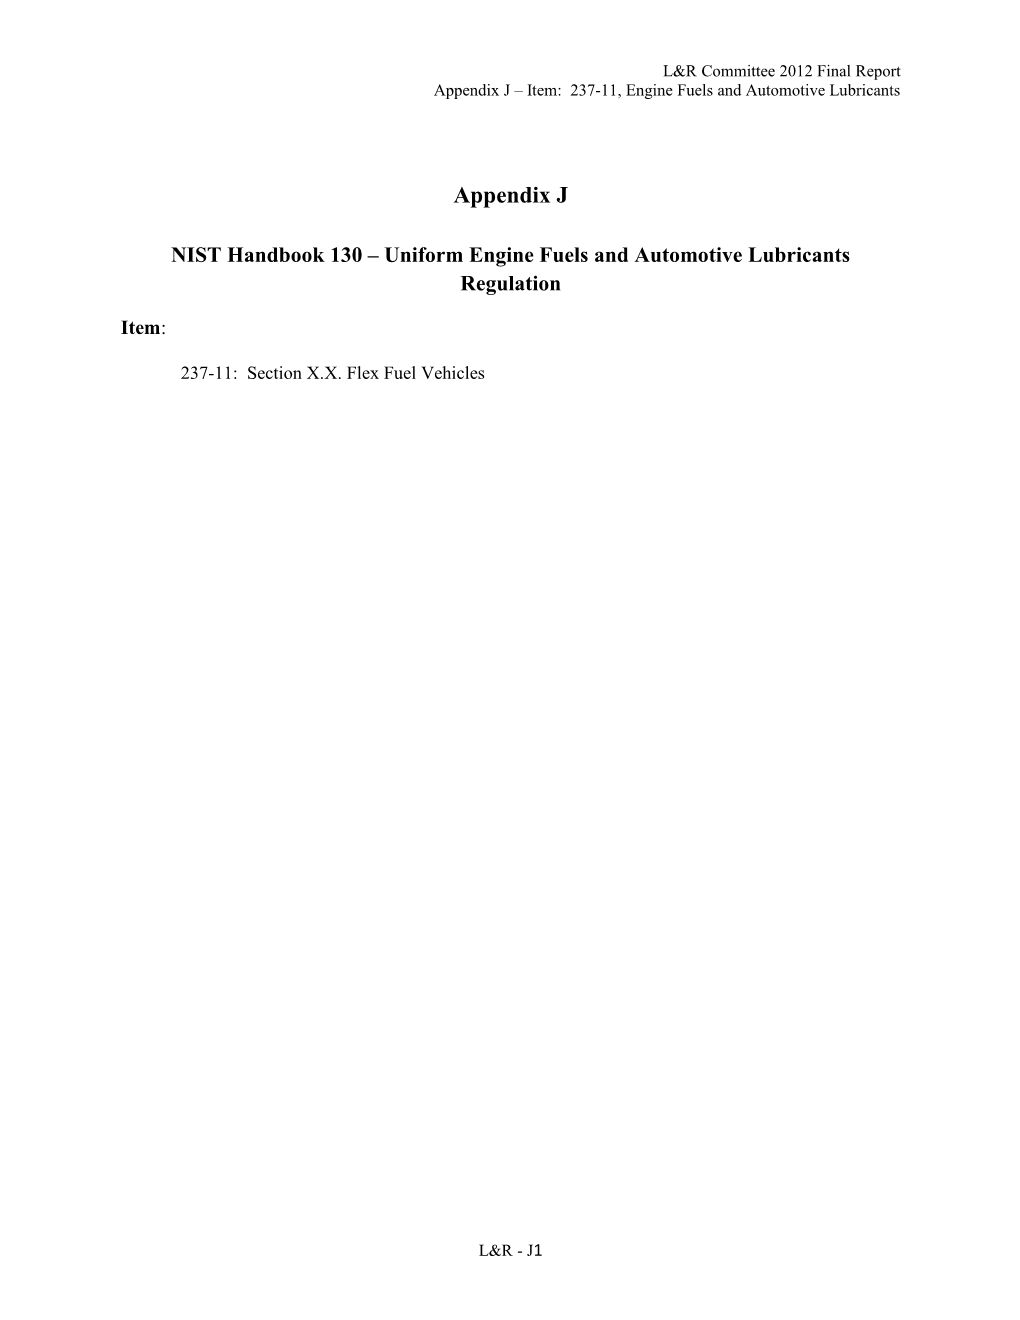 NIST Handbook 130 Uniform Engine Fuels and Automotive Lubricants Regulation